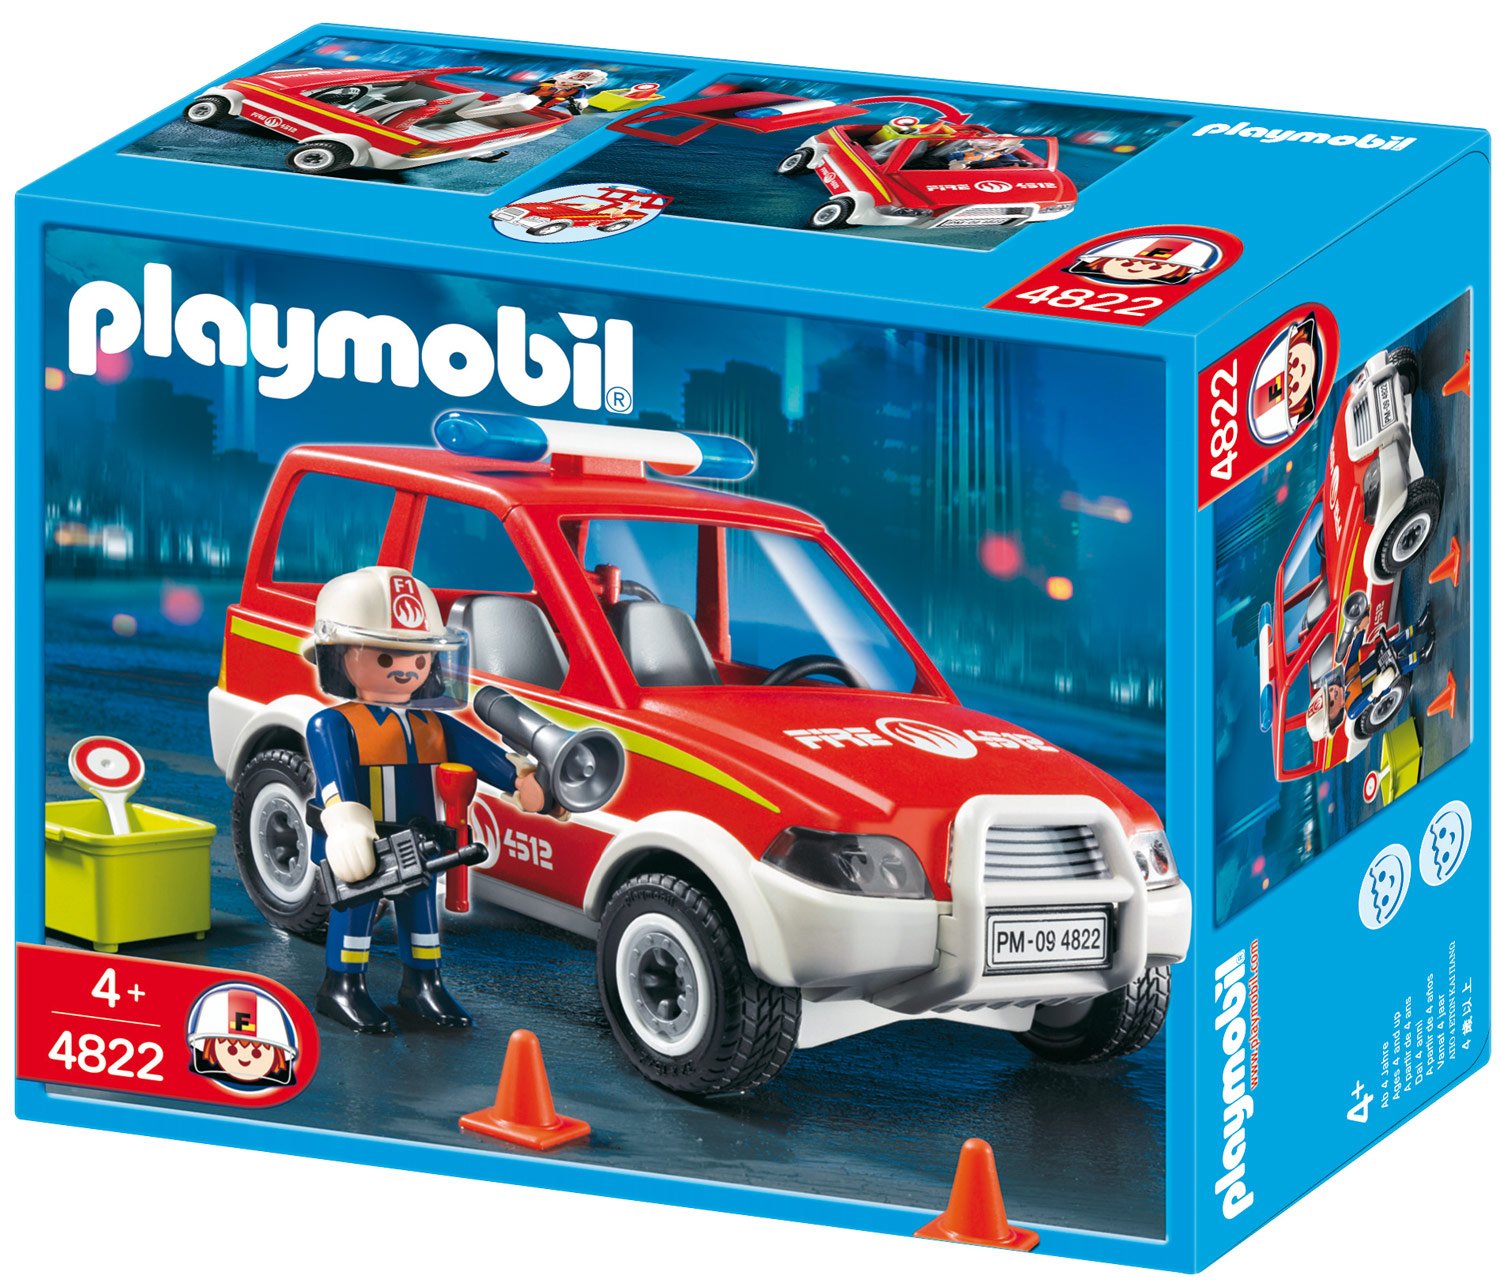 Playmobil Action Fire Chiefs Car